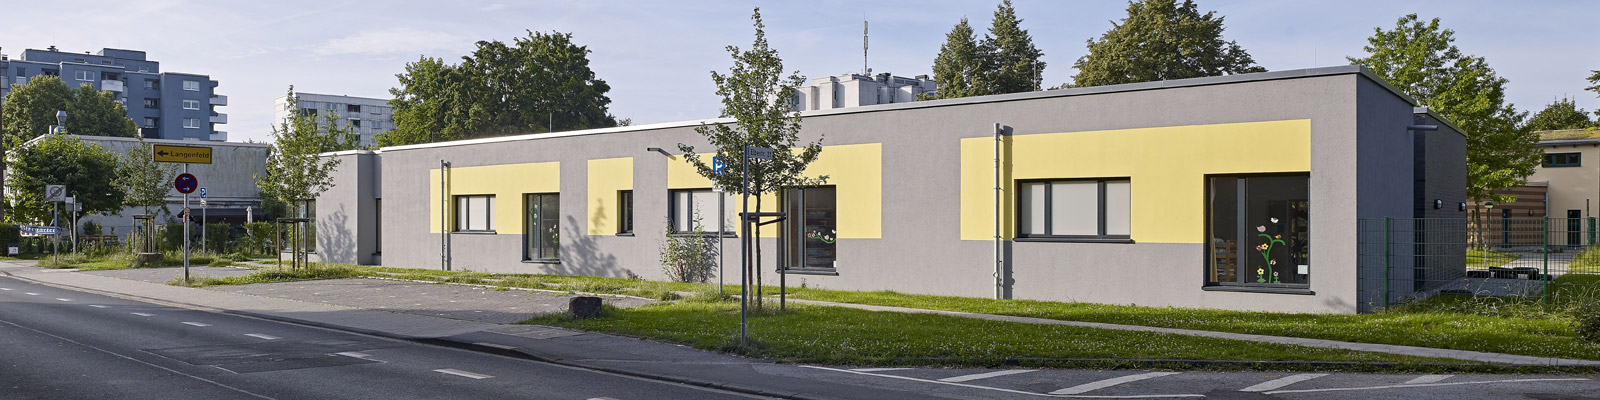 Kindertagesstätte, Leverkusen